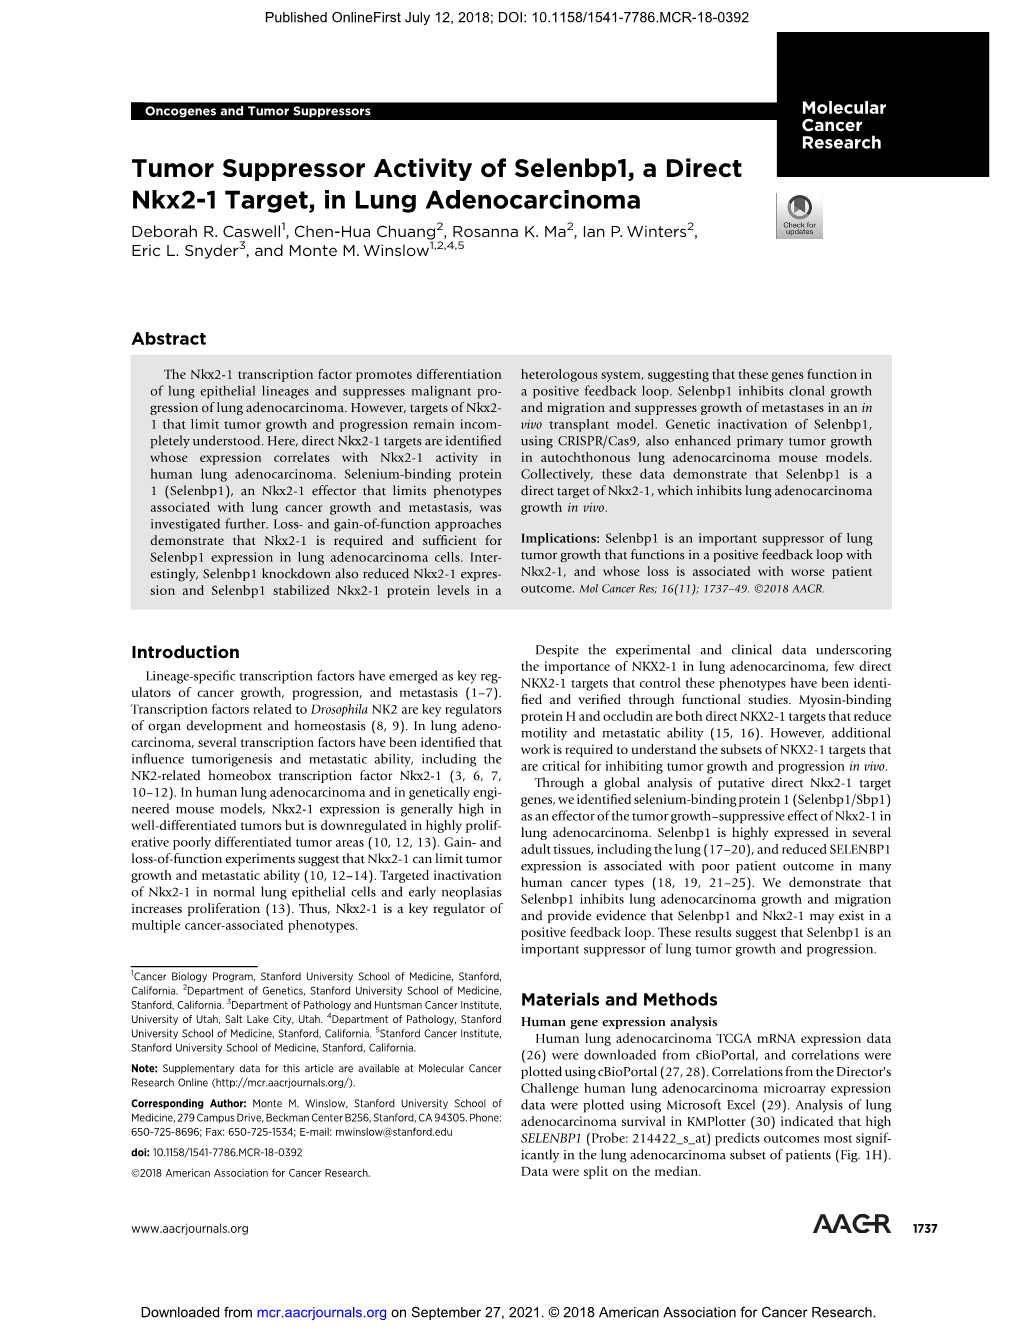 Tumor Suppressor Activity of Selenbp1, a Direct Nkx2-1 Target, in Lung Adenocarcinoma Deborah R